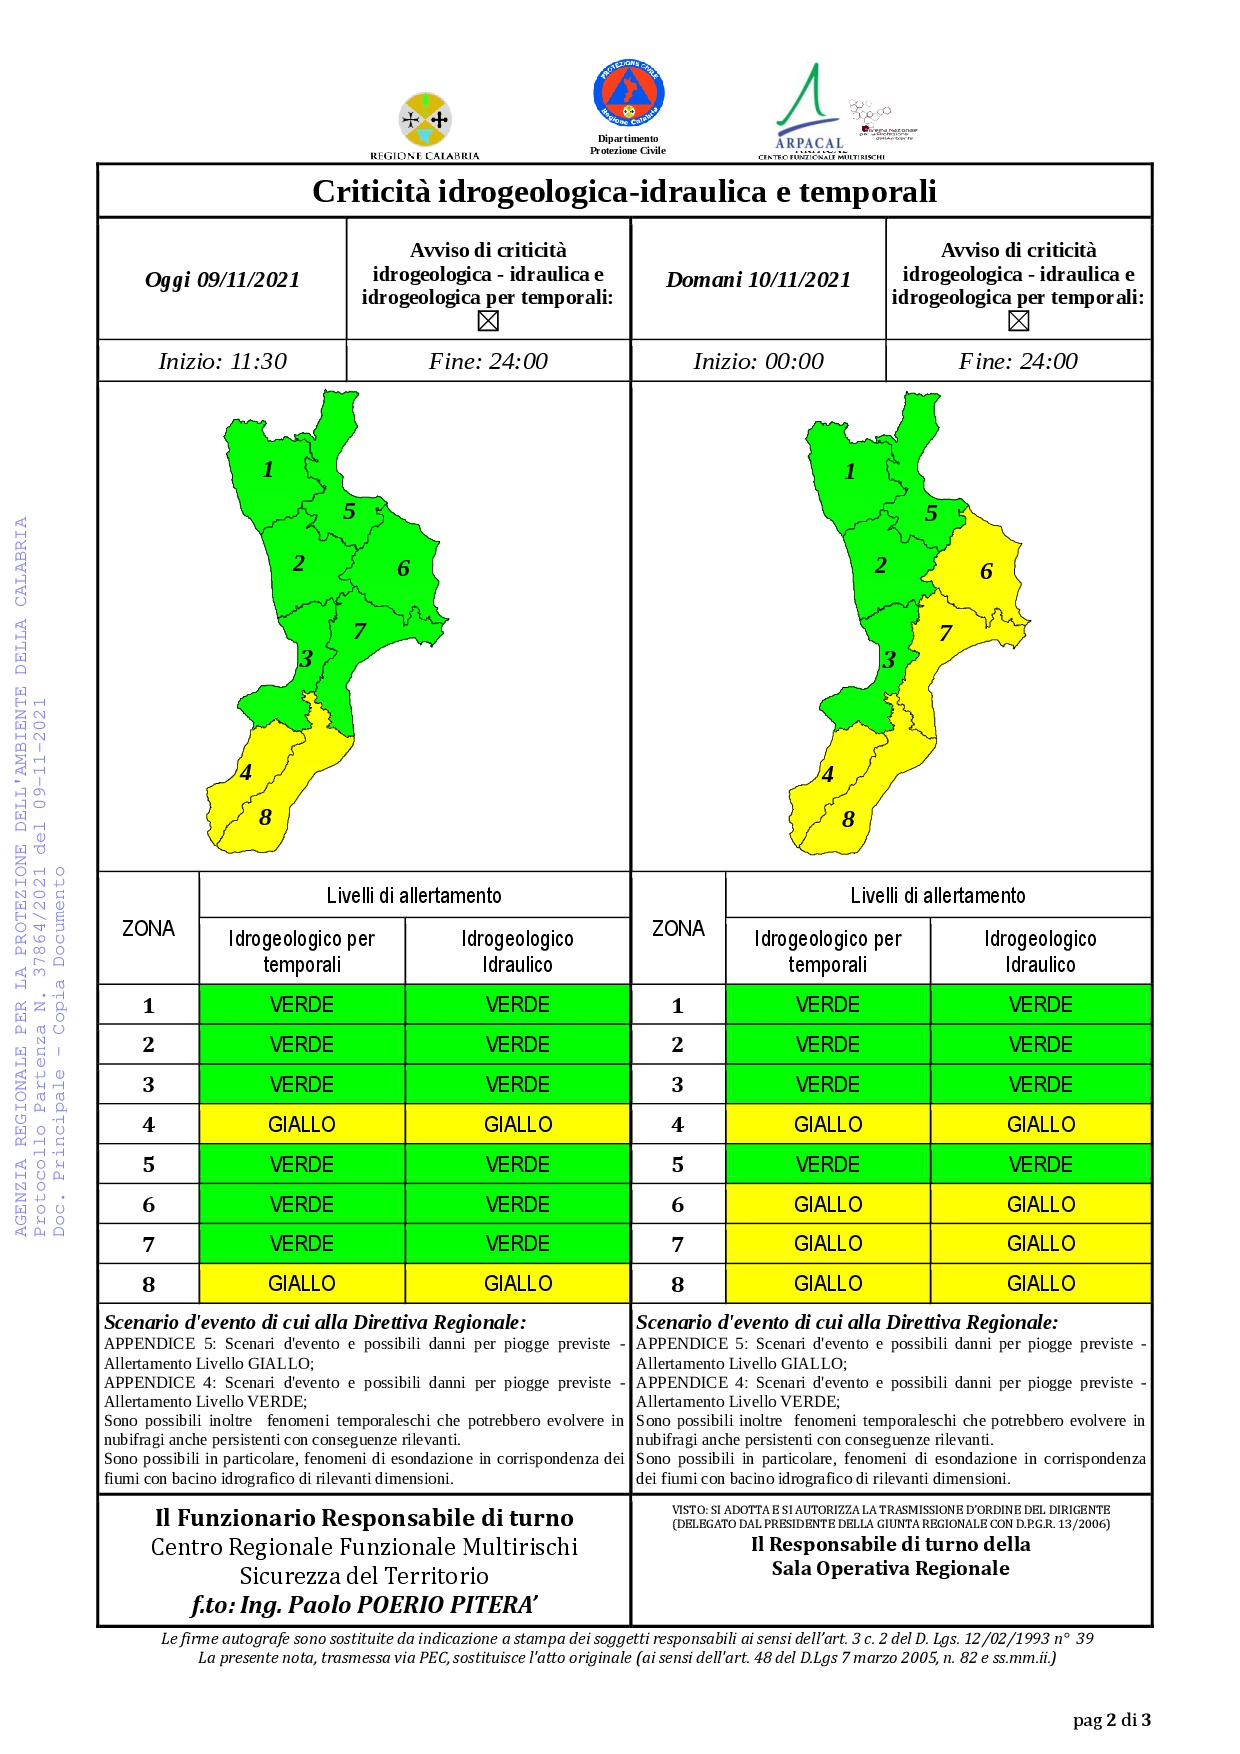 Criticità idrogeologica-idraulica e temporali in Calabria 09-11-2021